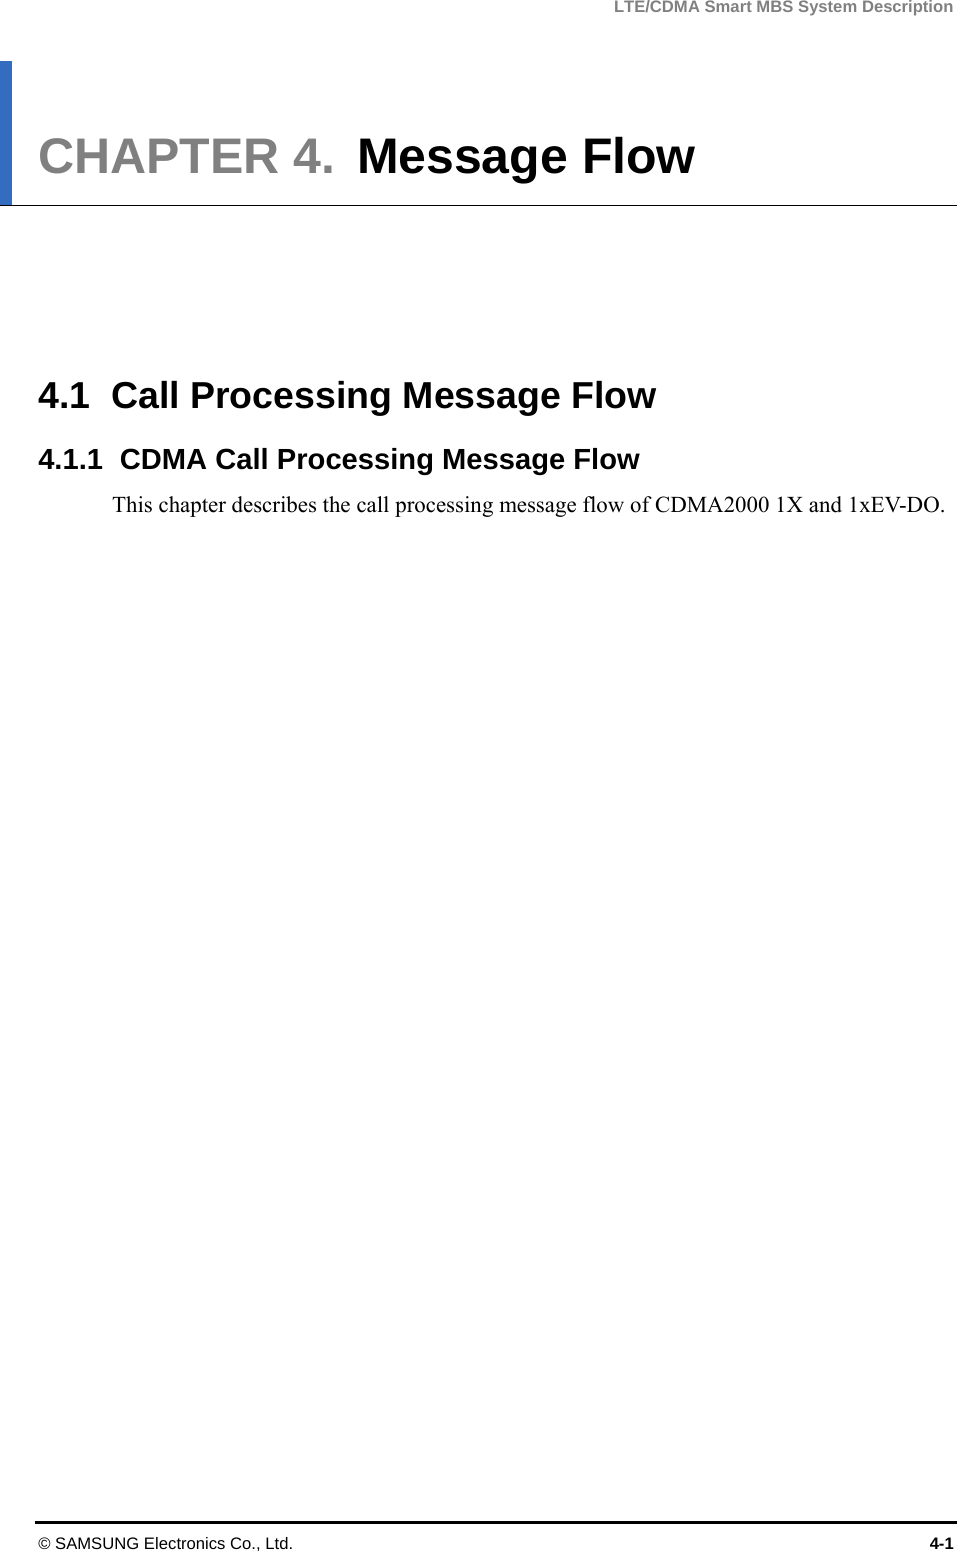 LTE/CDMA Smart MBS System Description © SAMSUNG Electronics Co., Ltd.  4-1 CHAPTER 4.  Message Flow      4.1  Call Processing Message Flow 4.1.1  CDMA Call Processing Message Flow This chapter describes the call processing message flow of CDMA2000 1X and 1xEV-DO.  